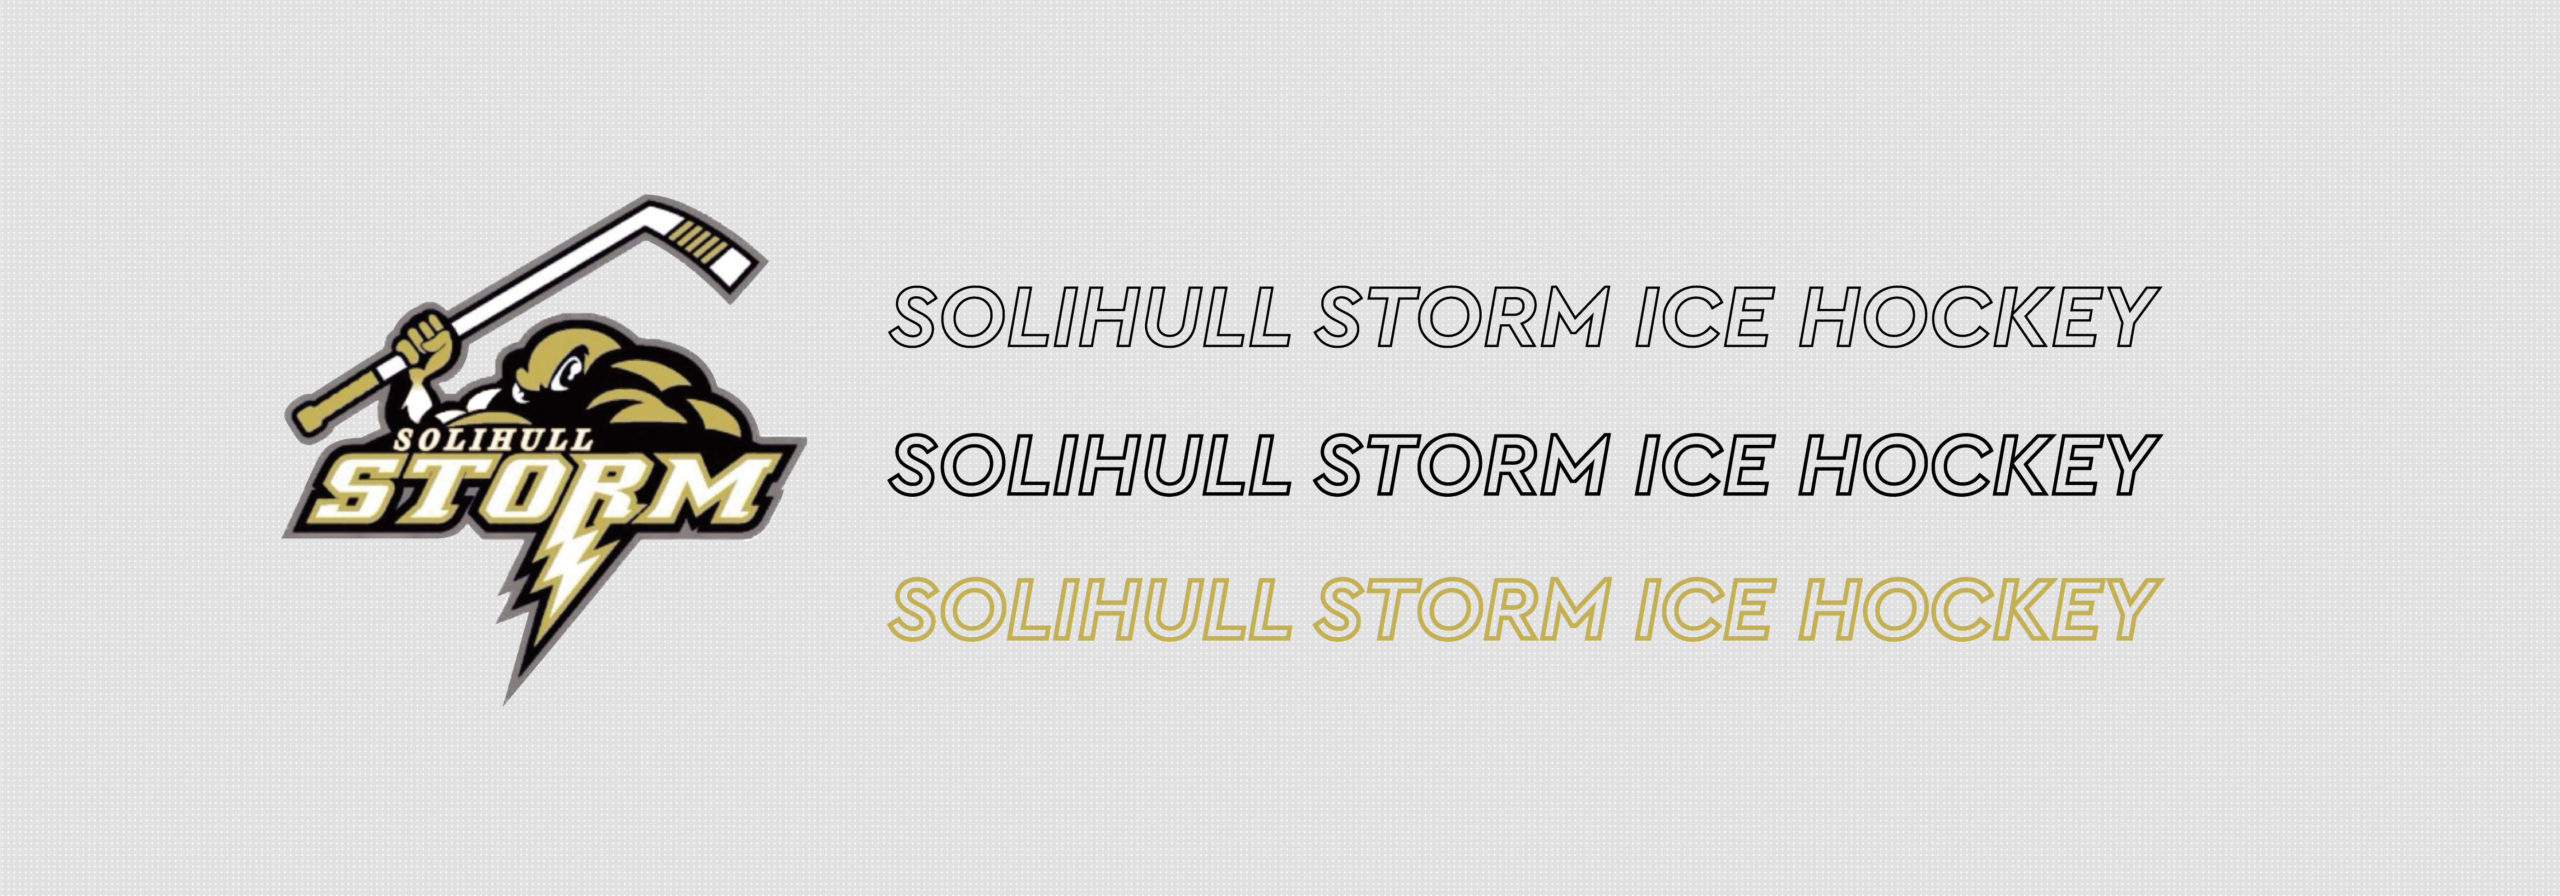 Solihull Storm Ice Hockey Club